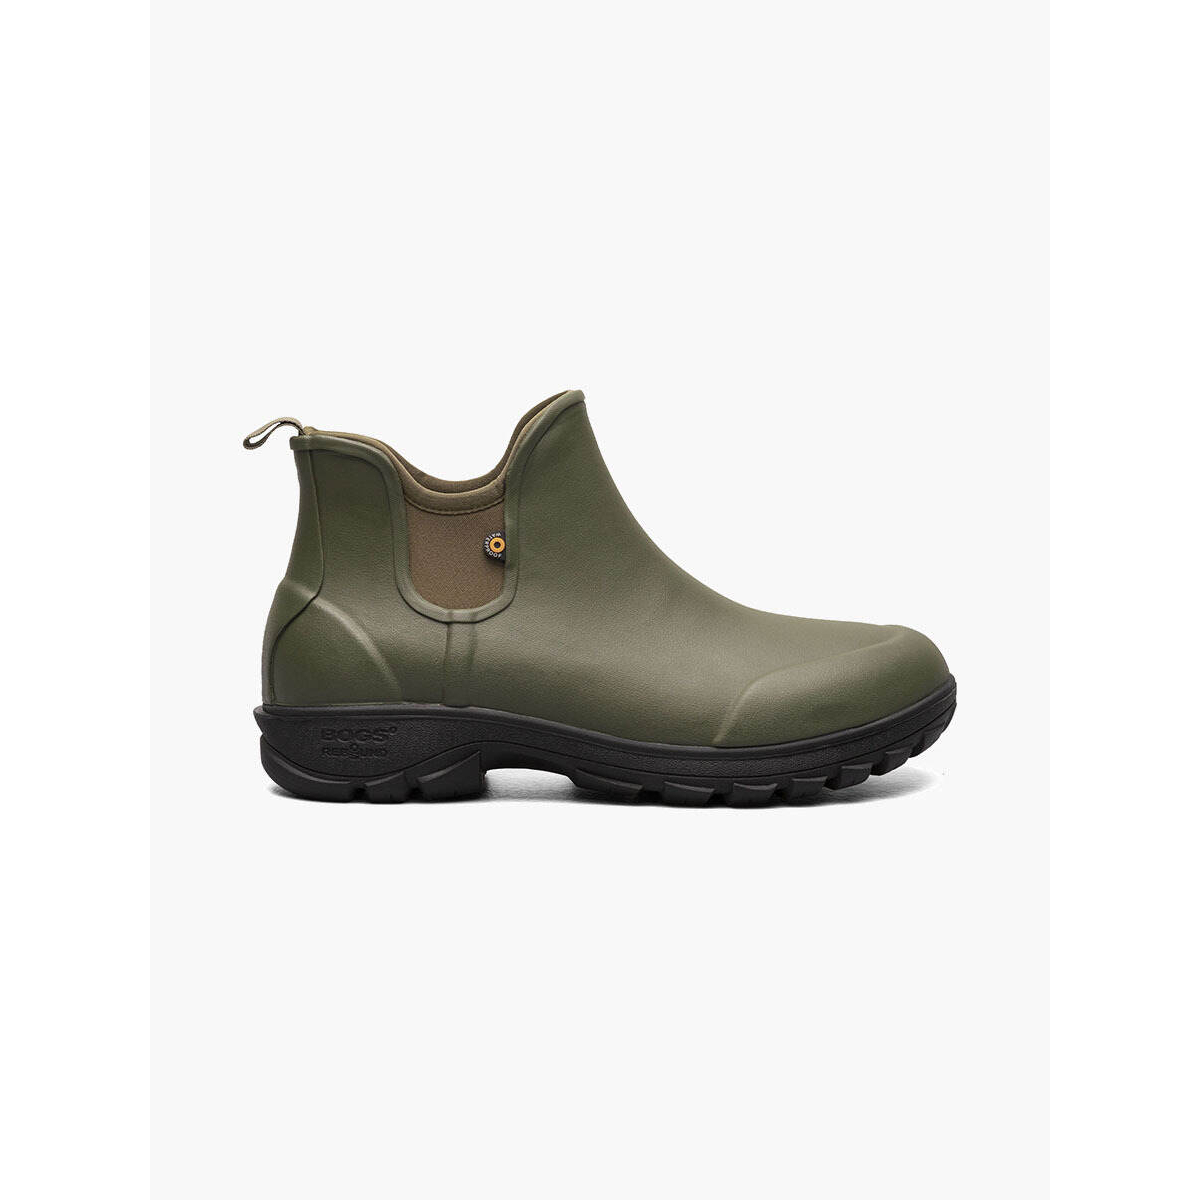 BOGS Men's Sauvie Slip On Insulated Waterproof Rain Boot Olive Multi - 72208-302 - OLIVE MLTI, 11